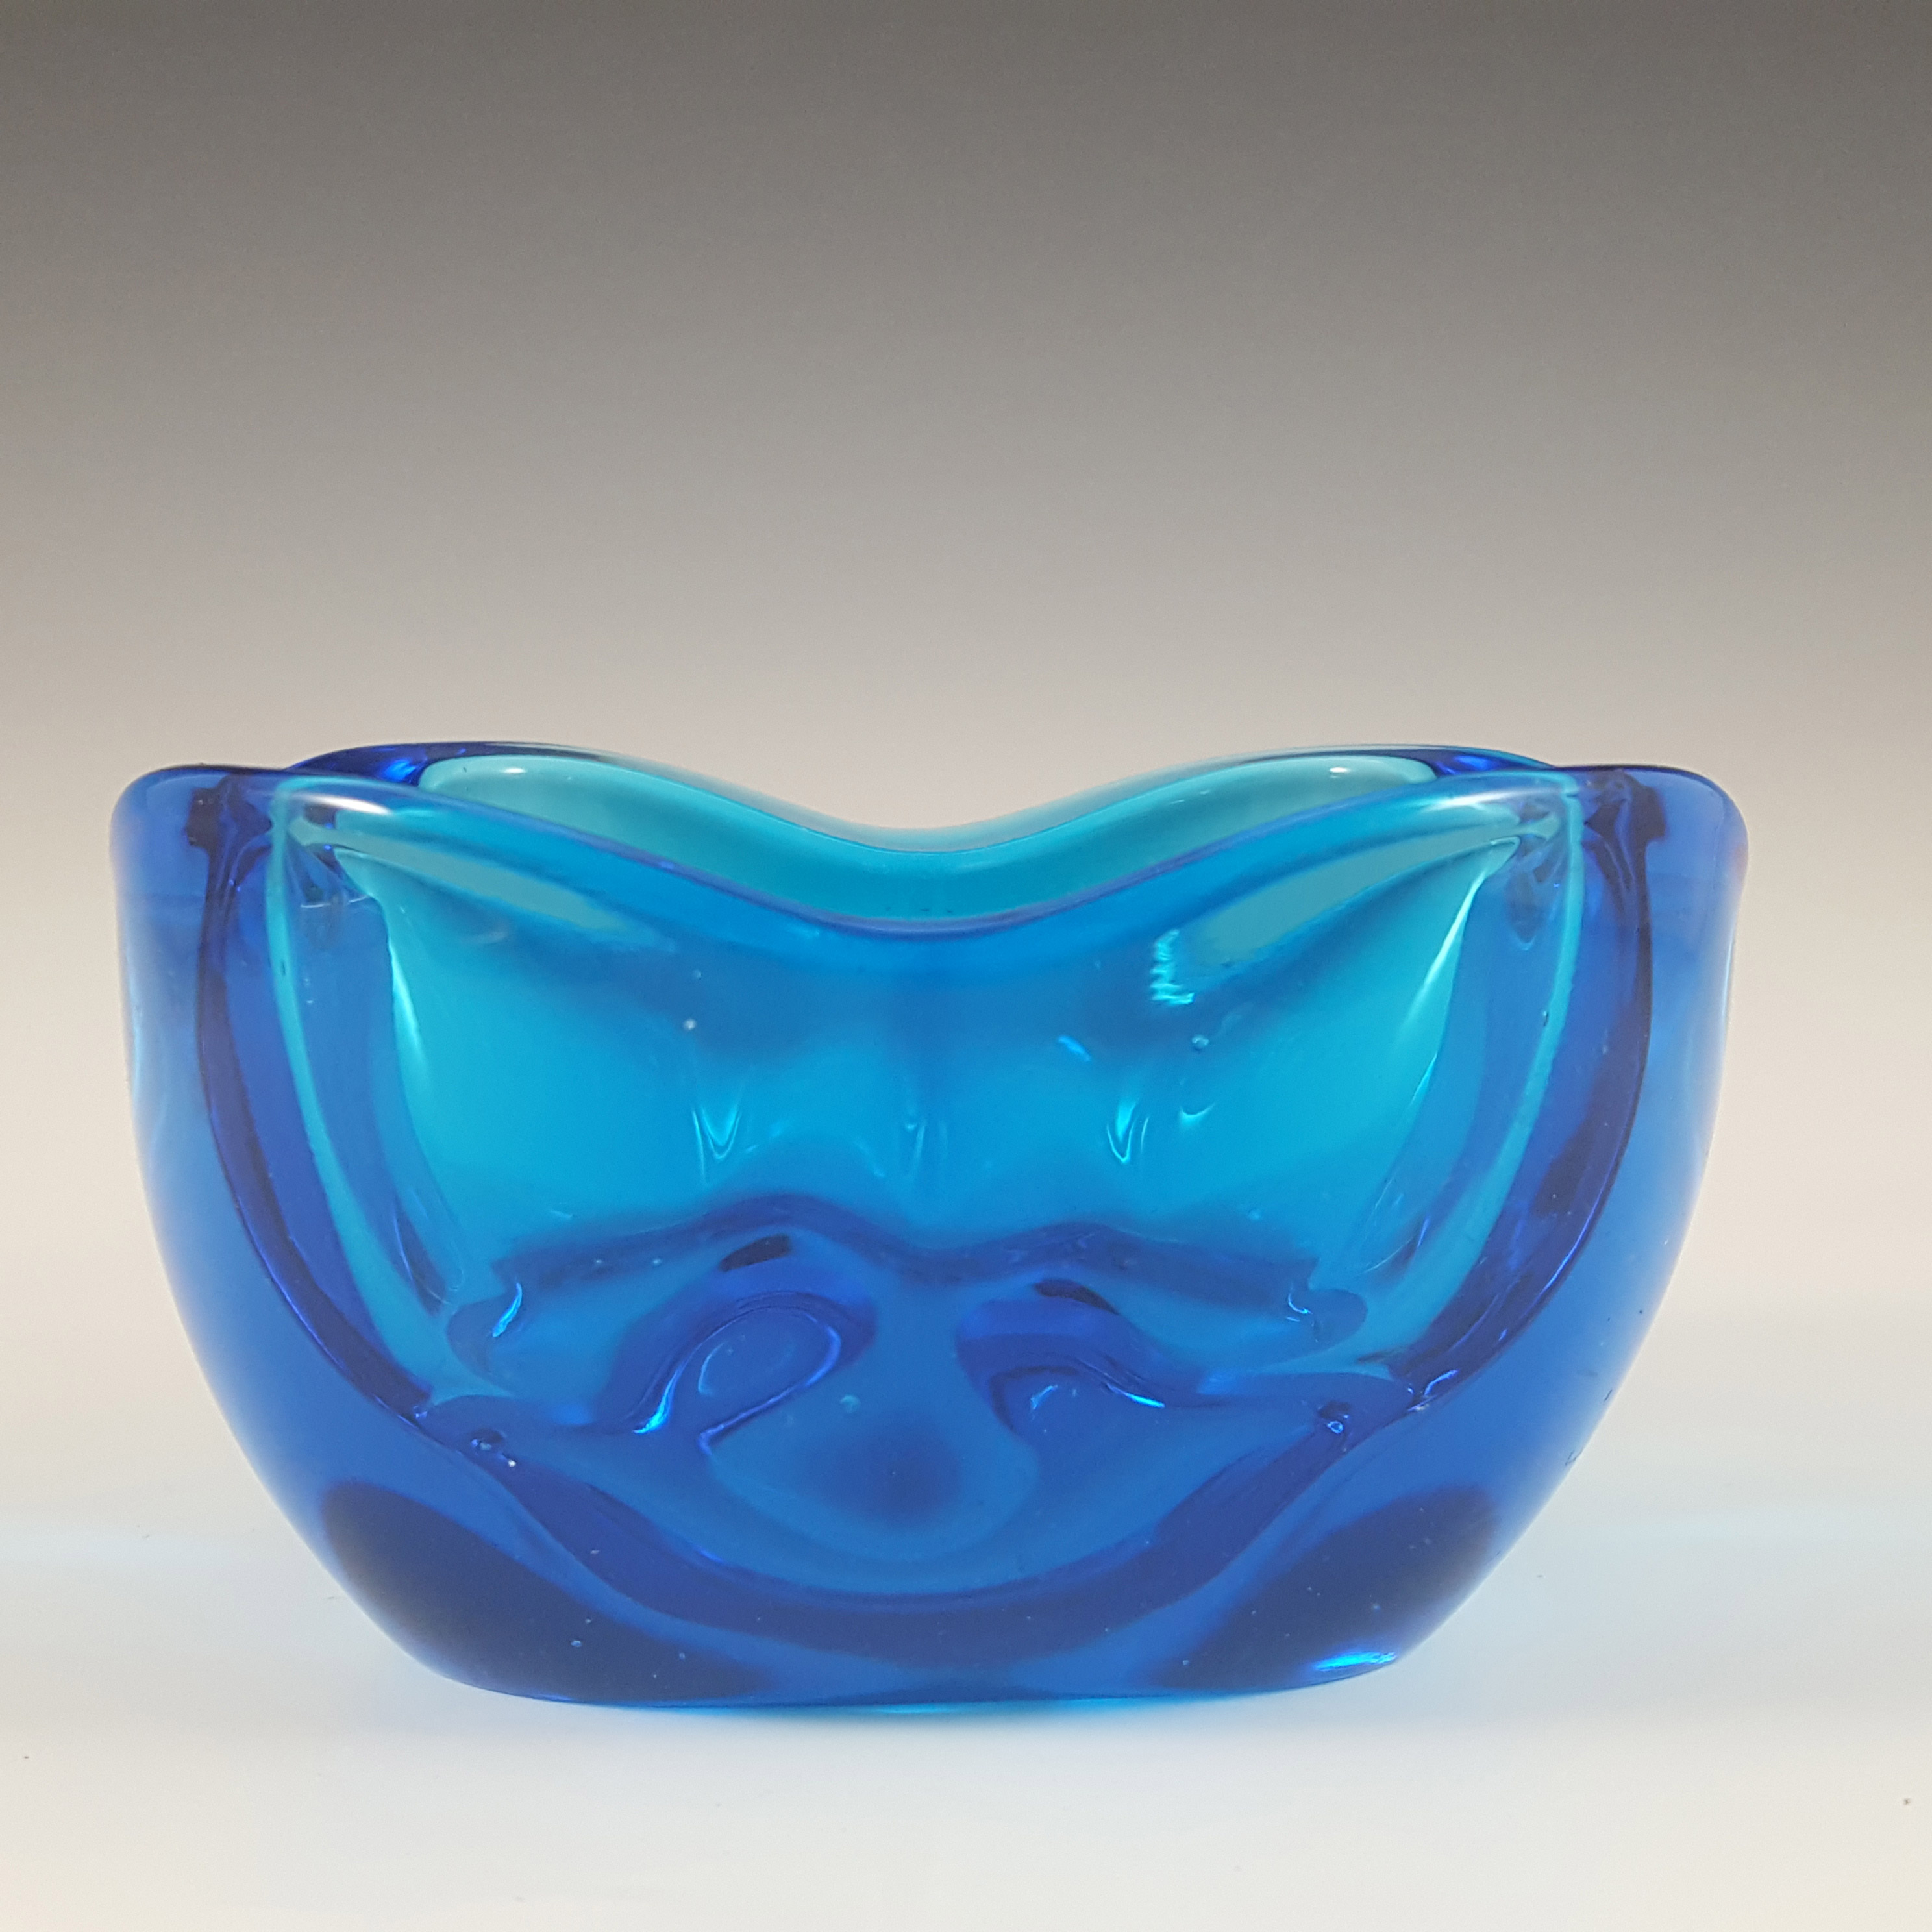 Ashtray Union Sklo Bowl Glass by Jurnikl Rudolf Rosice #1145 Blue